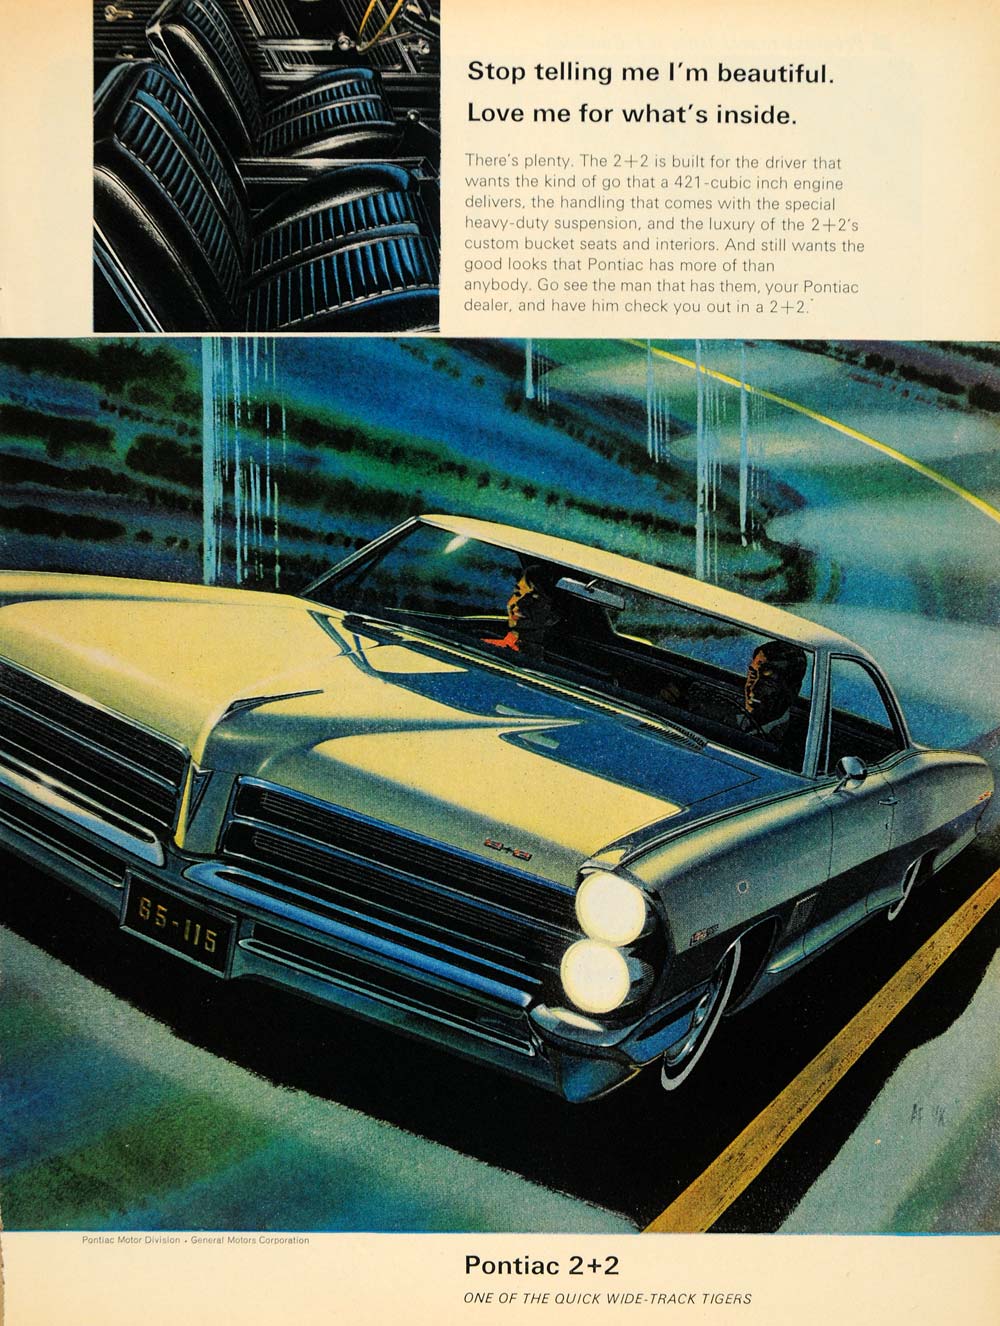 1965 Ad Pontiac Motor Division GM Corp. 2+2 Automobile - ORIGINAL TM6